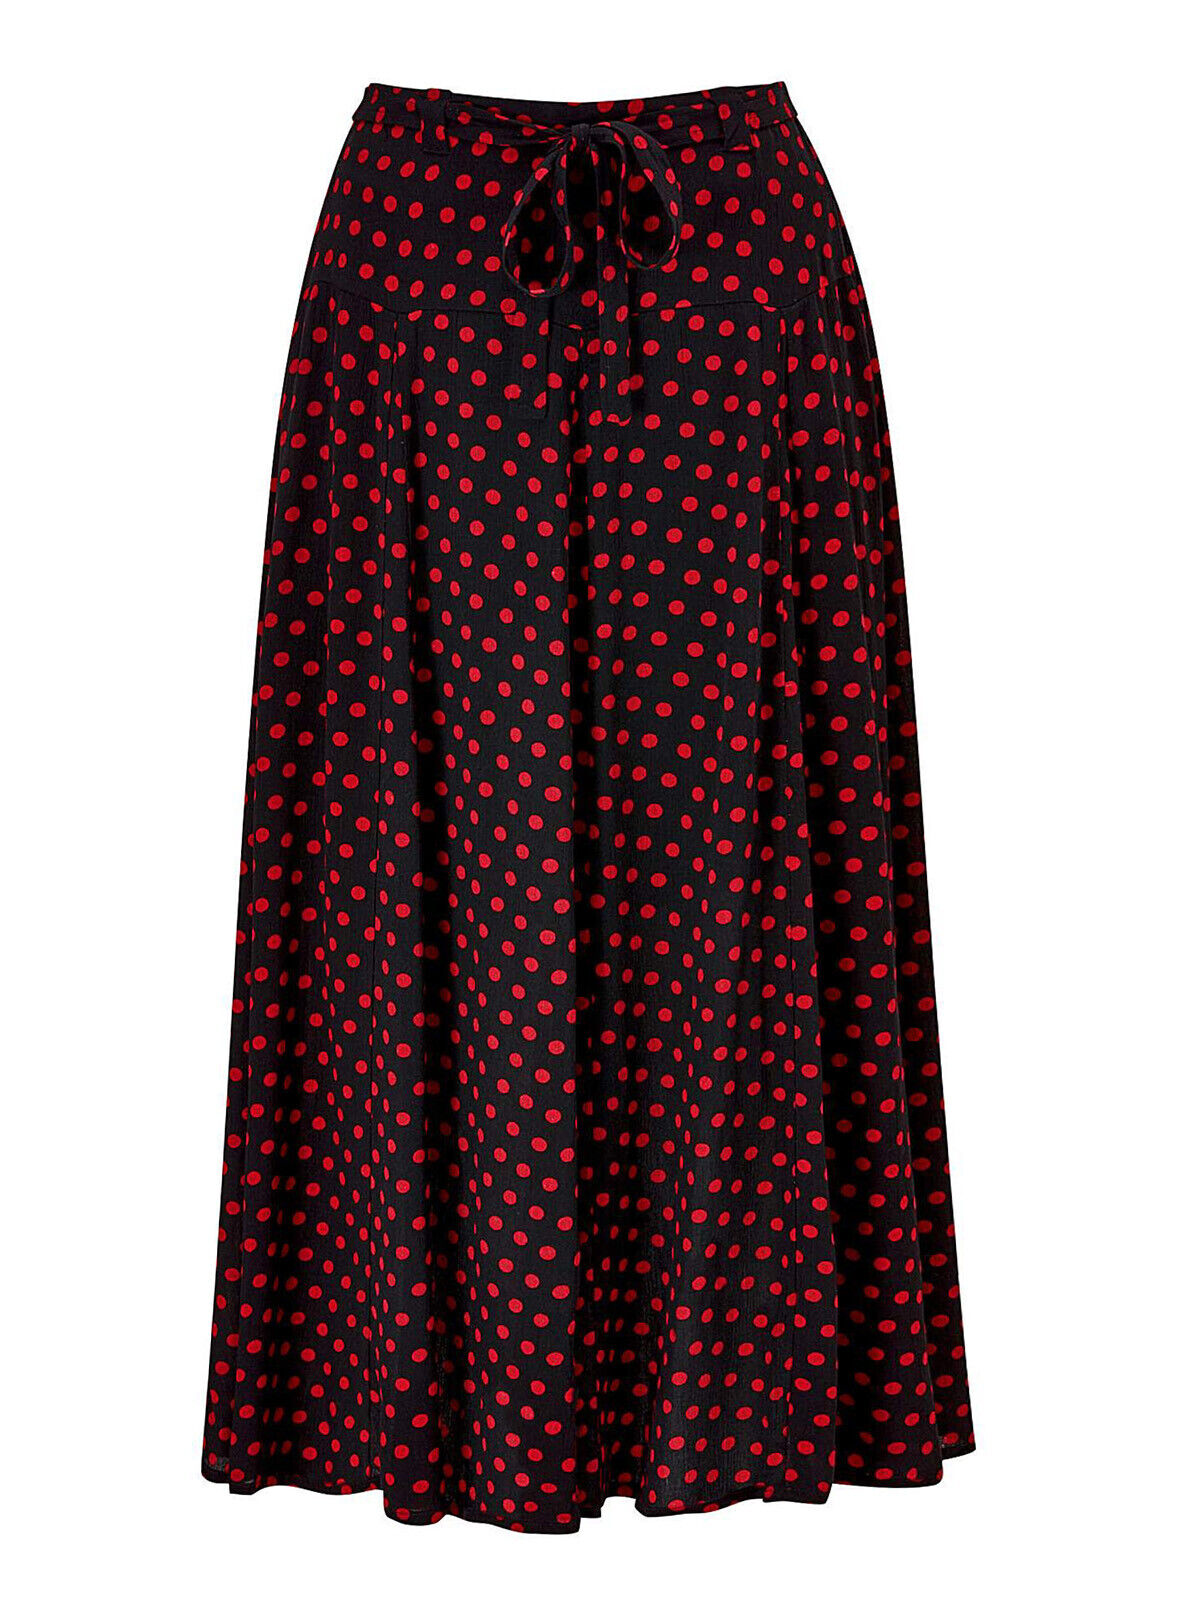 Joe Browns Red Devilish Polka Dot Skirt Sizes 12, 18, 20, 22, 24 RRP £45